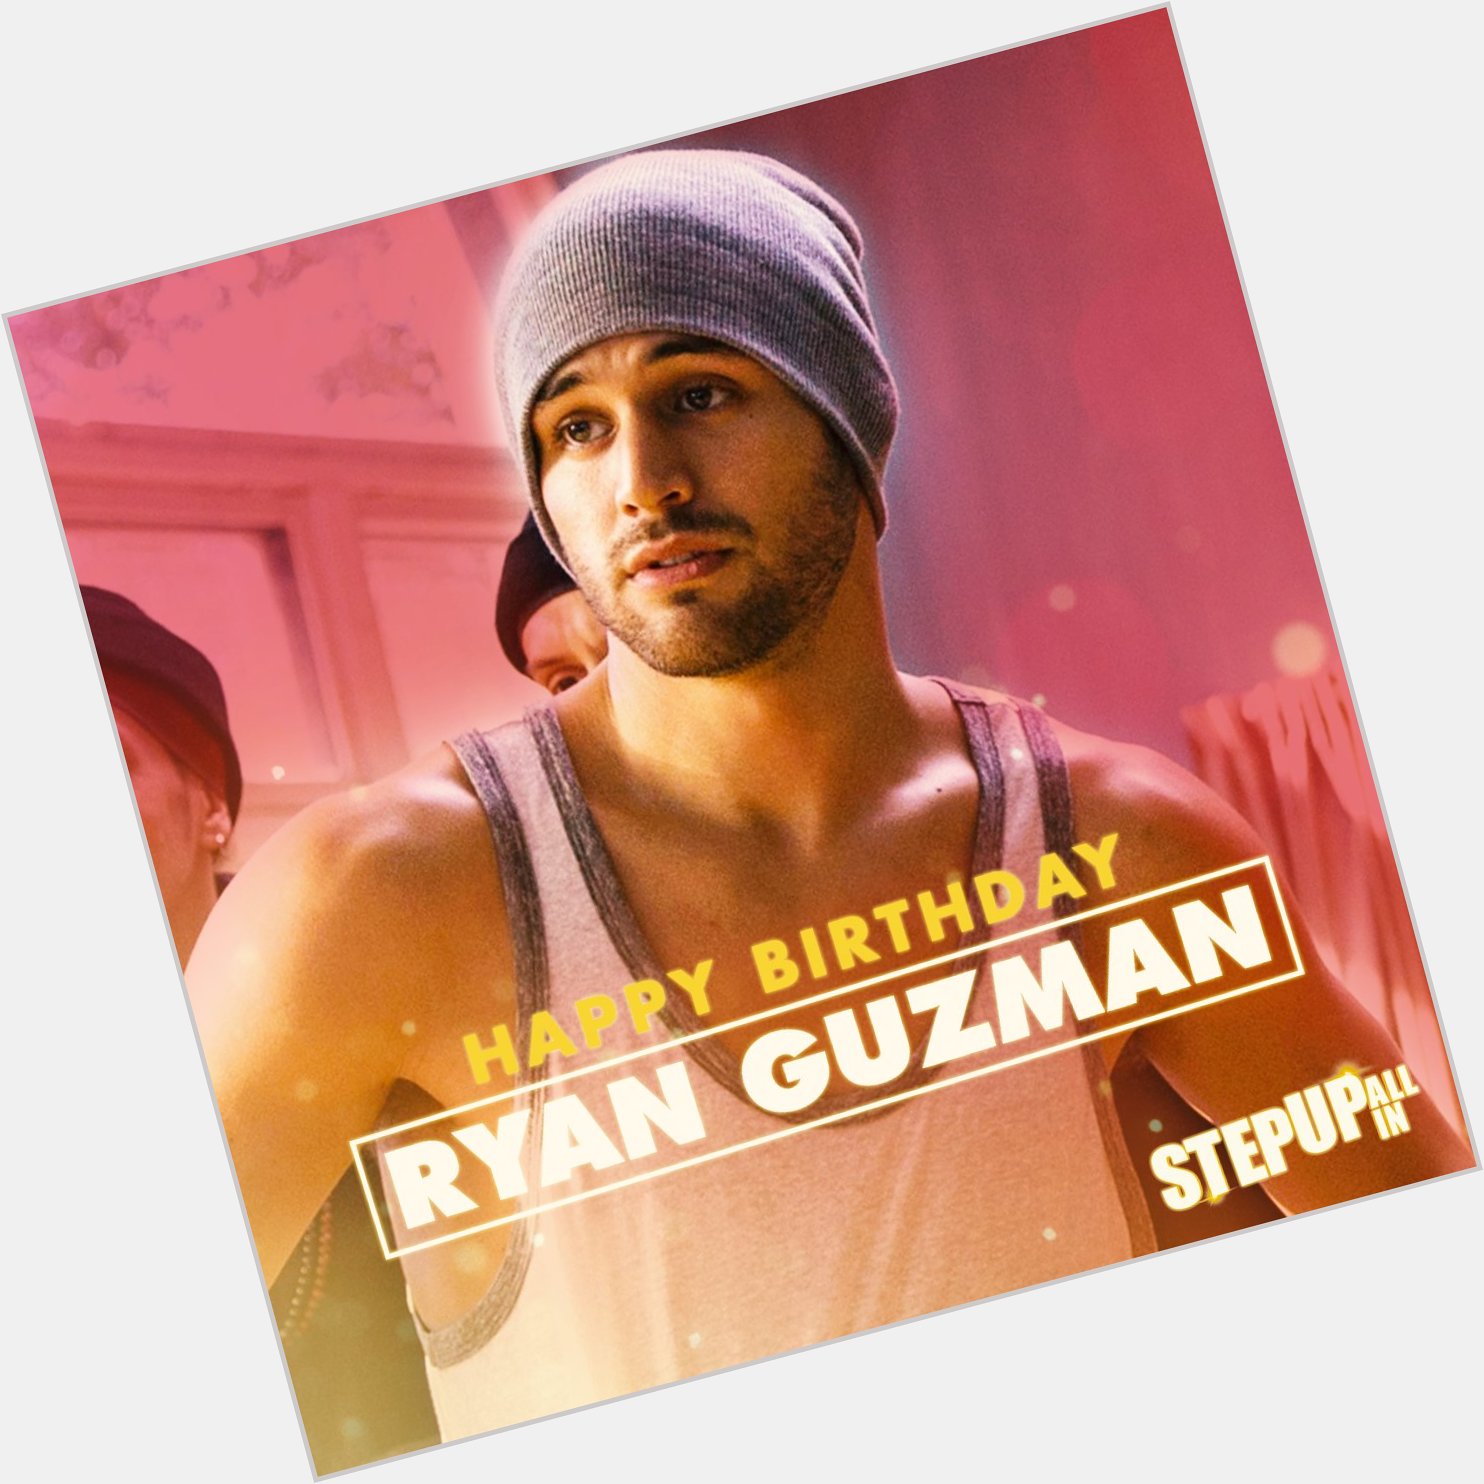 Happy birthday to the incredible Ryan Guzman! 